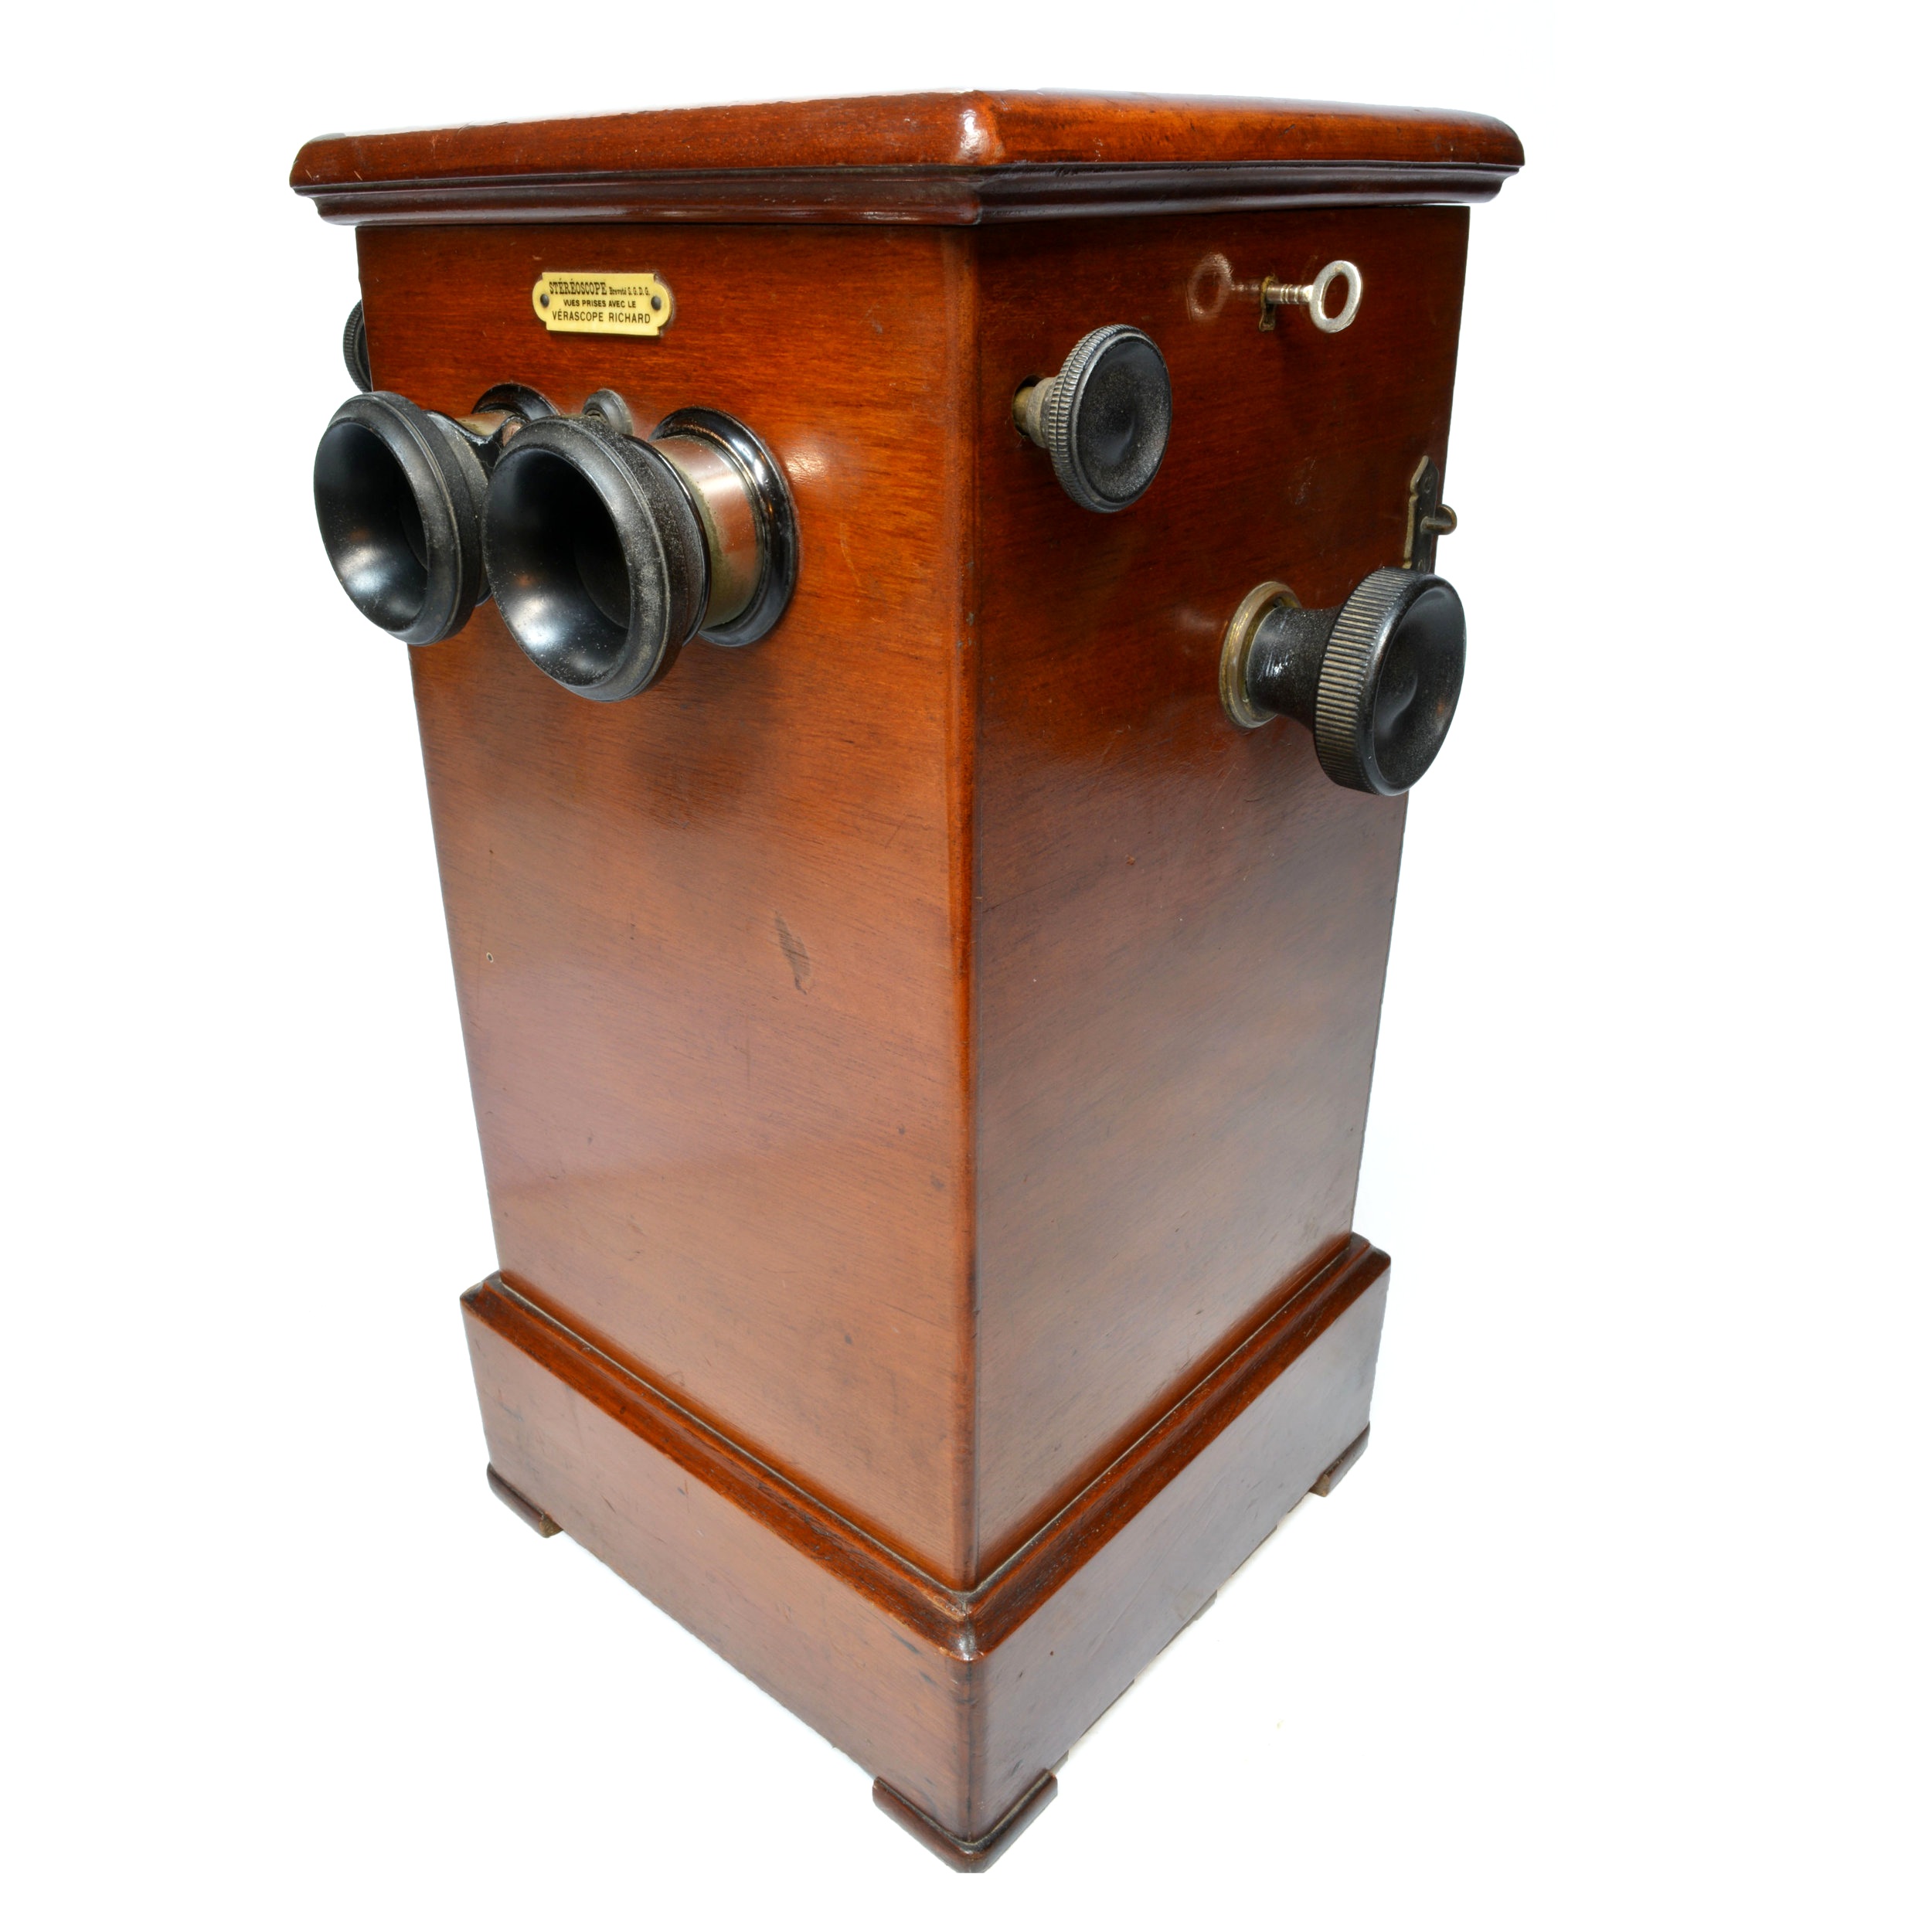 Jules Richard Verascope stereoscope